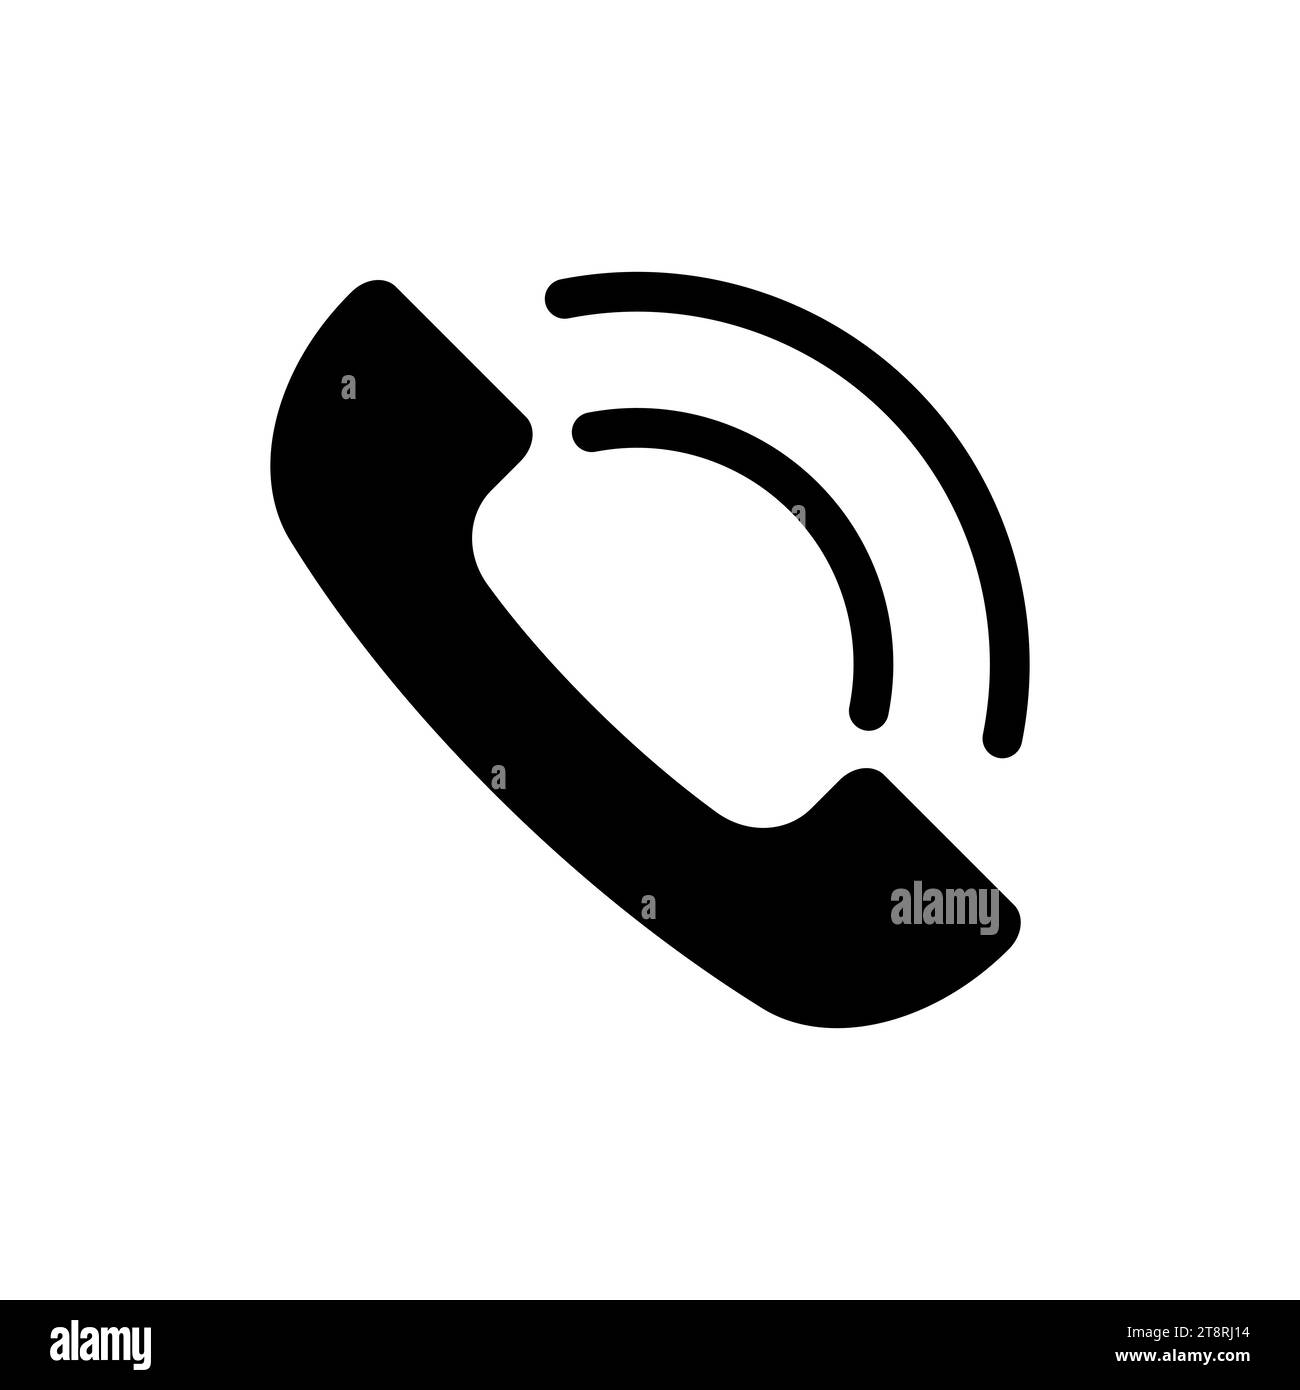 Phone icon. Contact us icon. Telephone symbol. Handset phone icon. Vector illustration Stock Vector